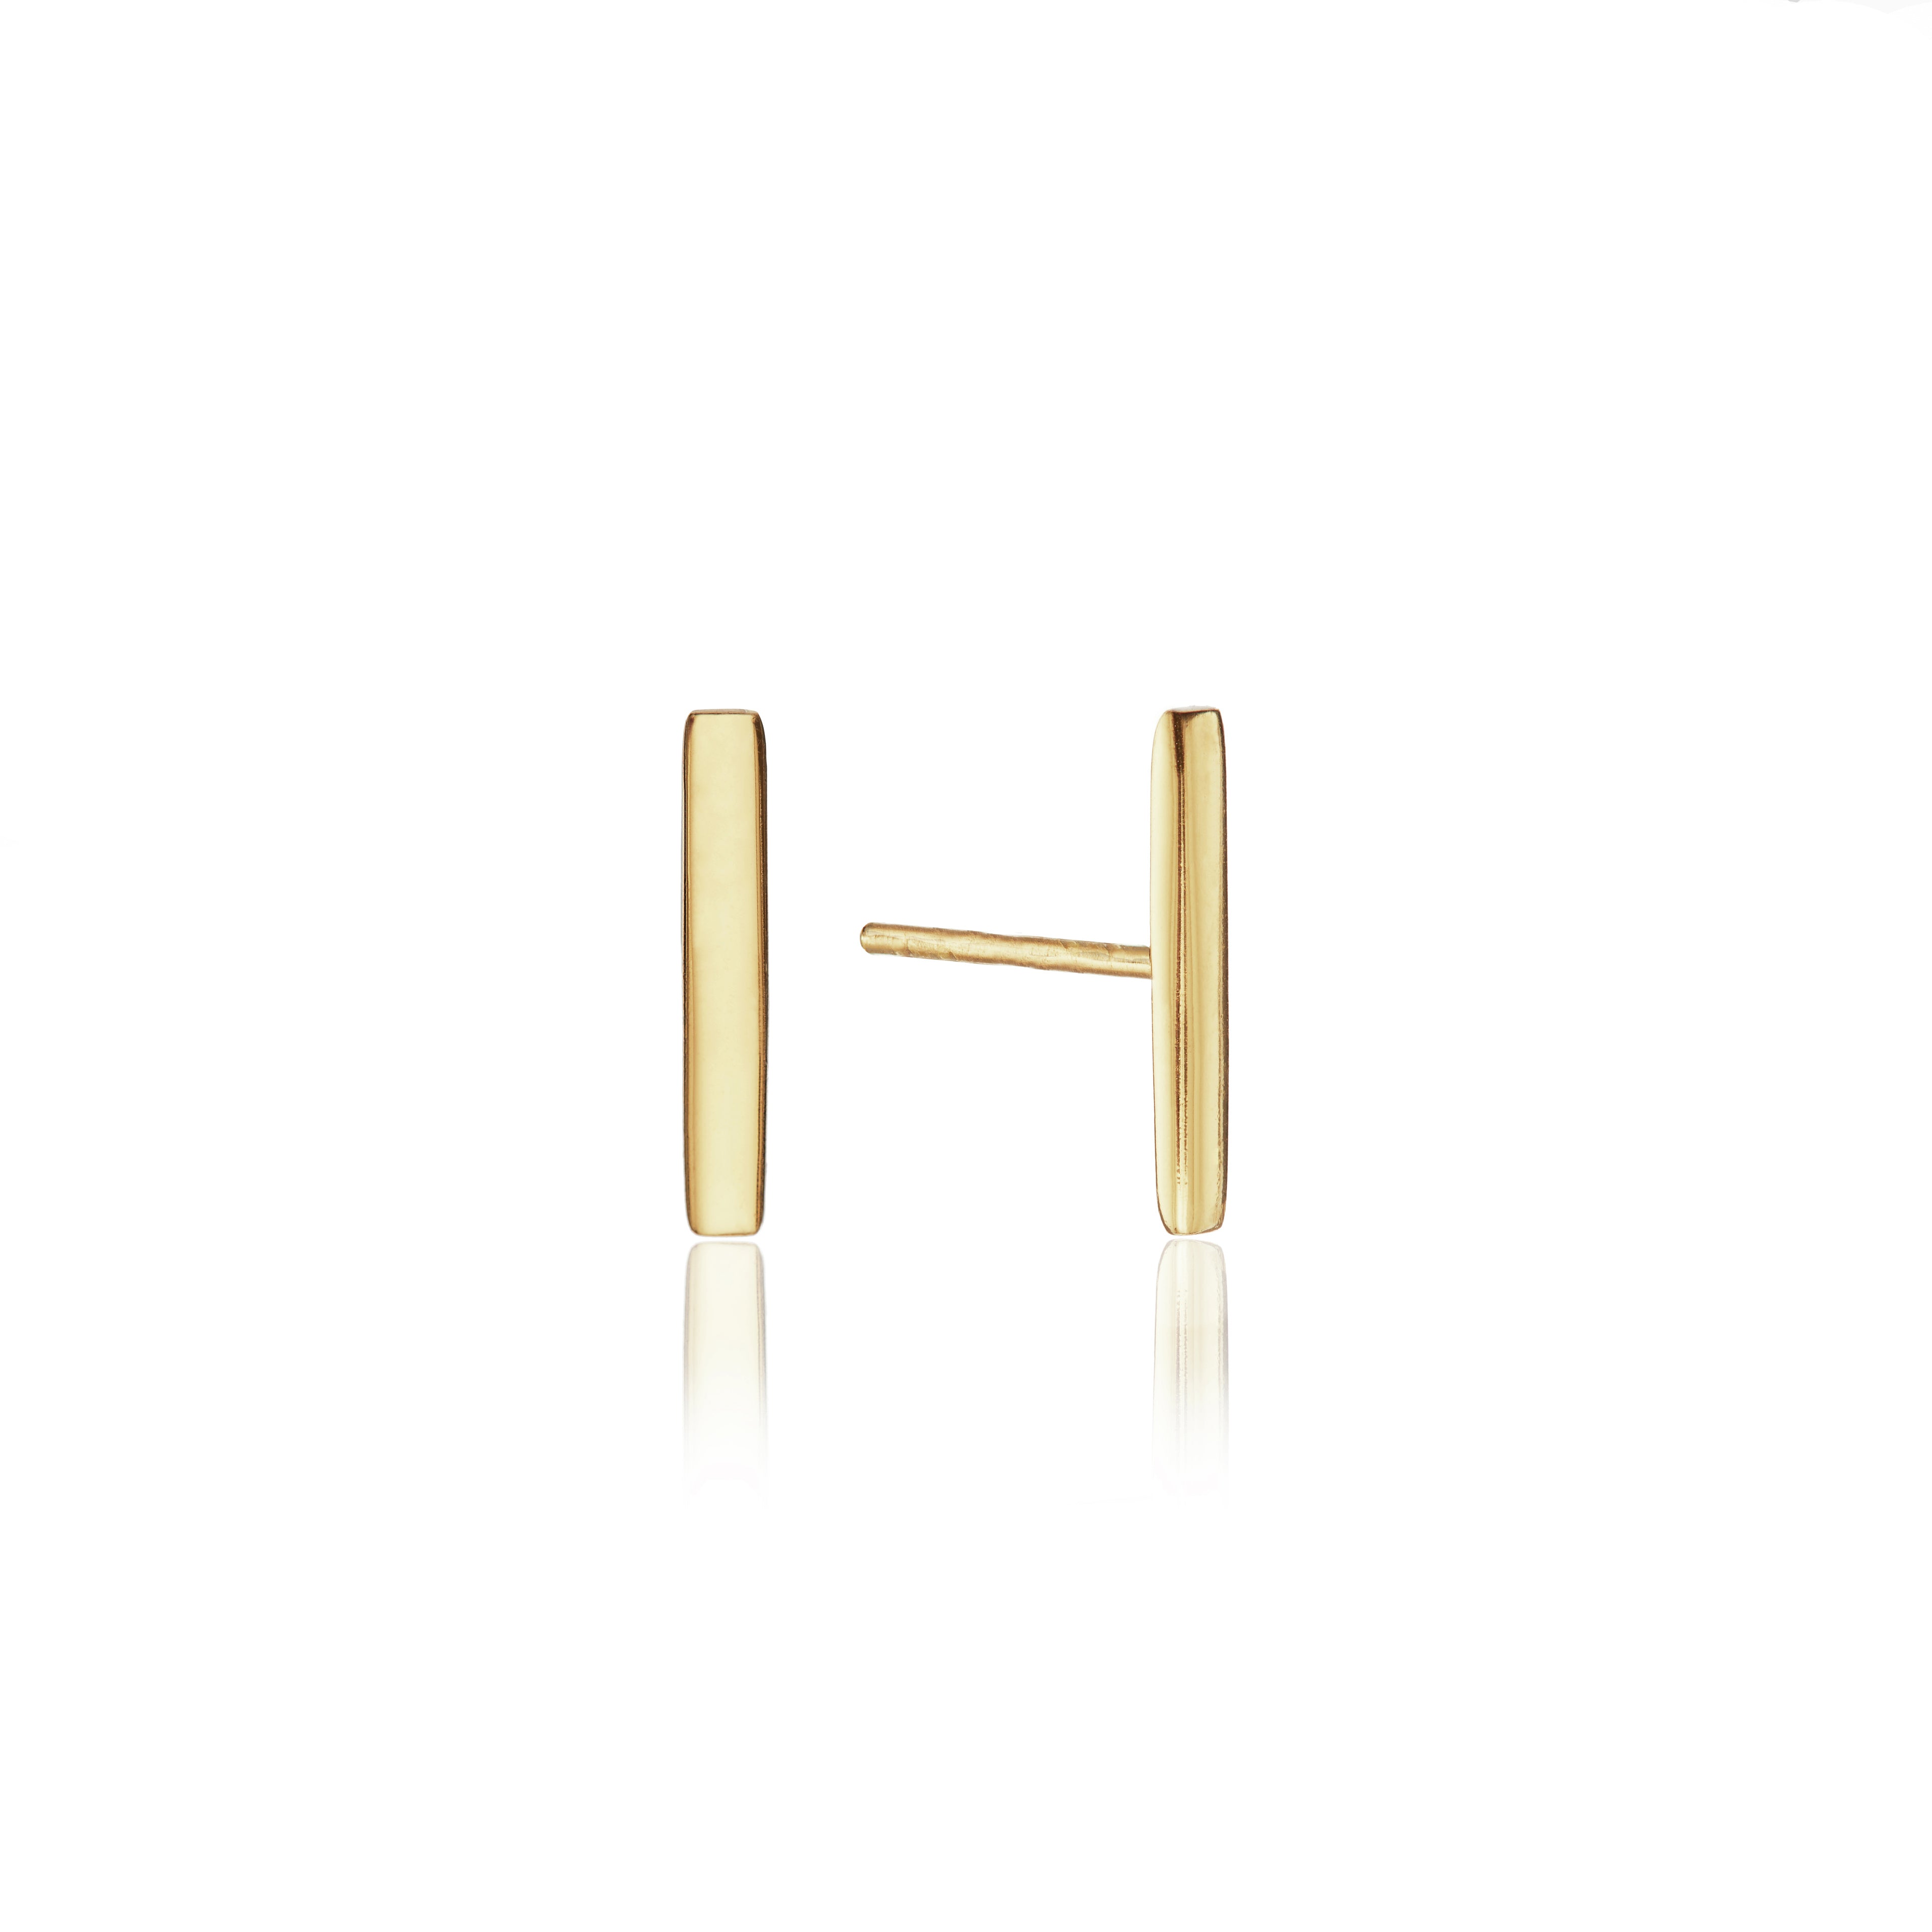 Gold plain bar stud earrings on a white background